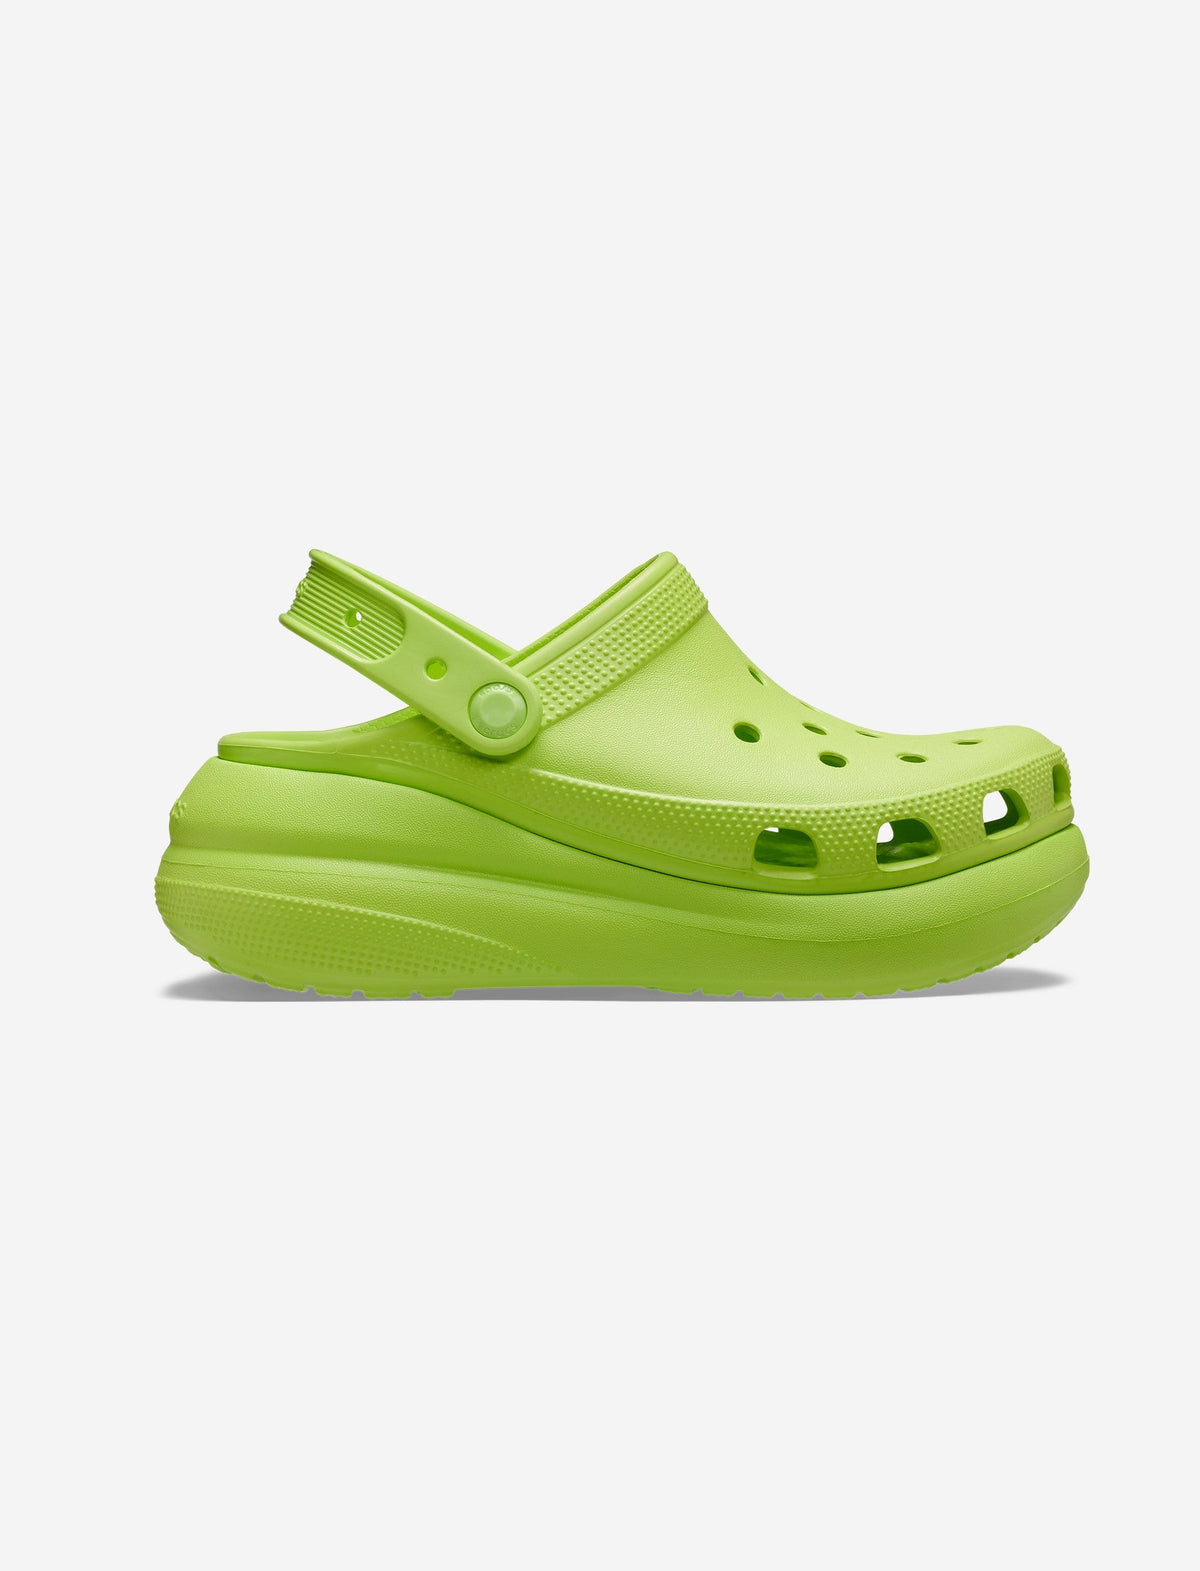 Crocs Classic Crush Clog - כפכפי פלטפורמה קרוקס קראש לנשים בצבע ירוק לימונדה-Crocs-36-37-נאקו